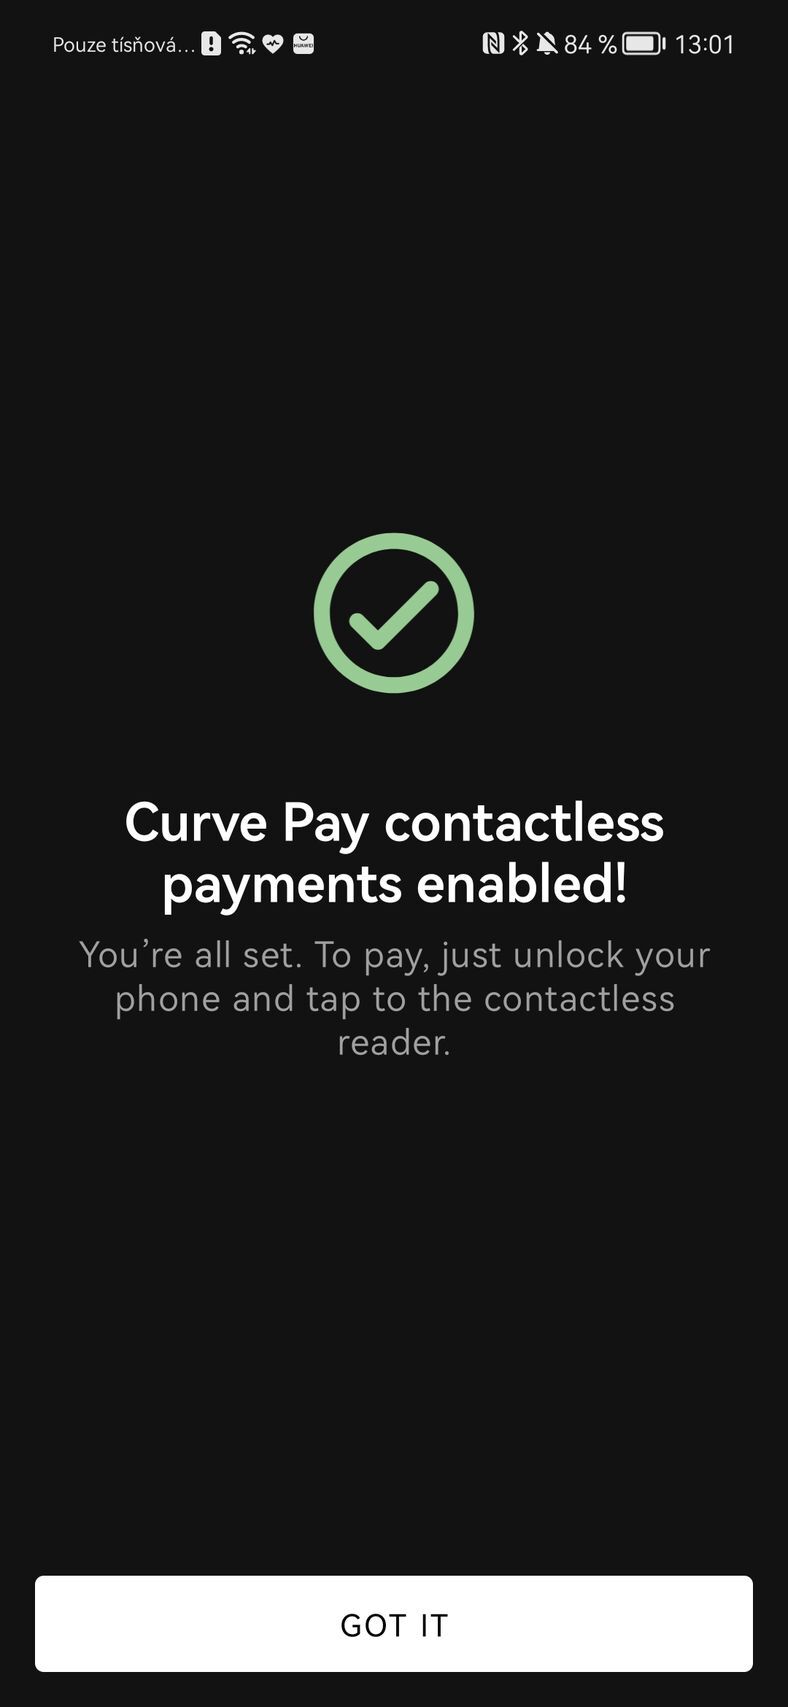 Curve Pay